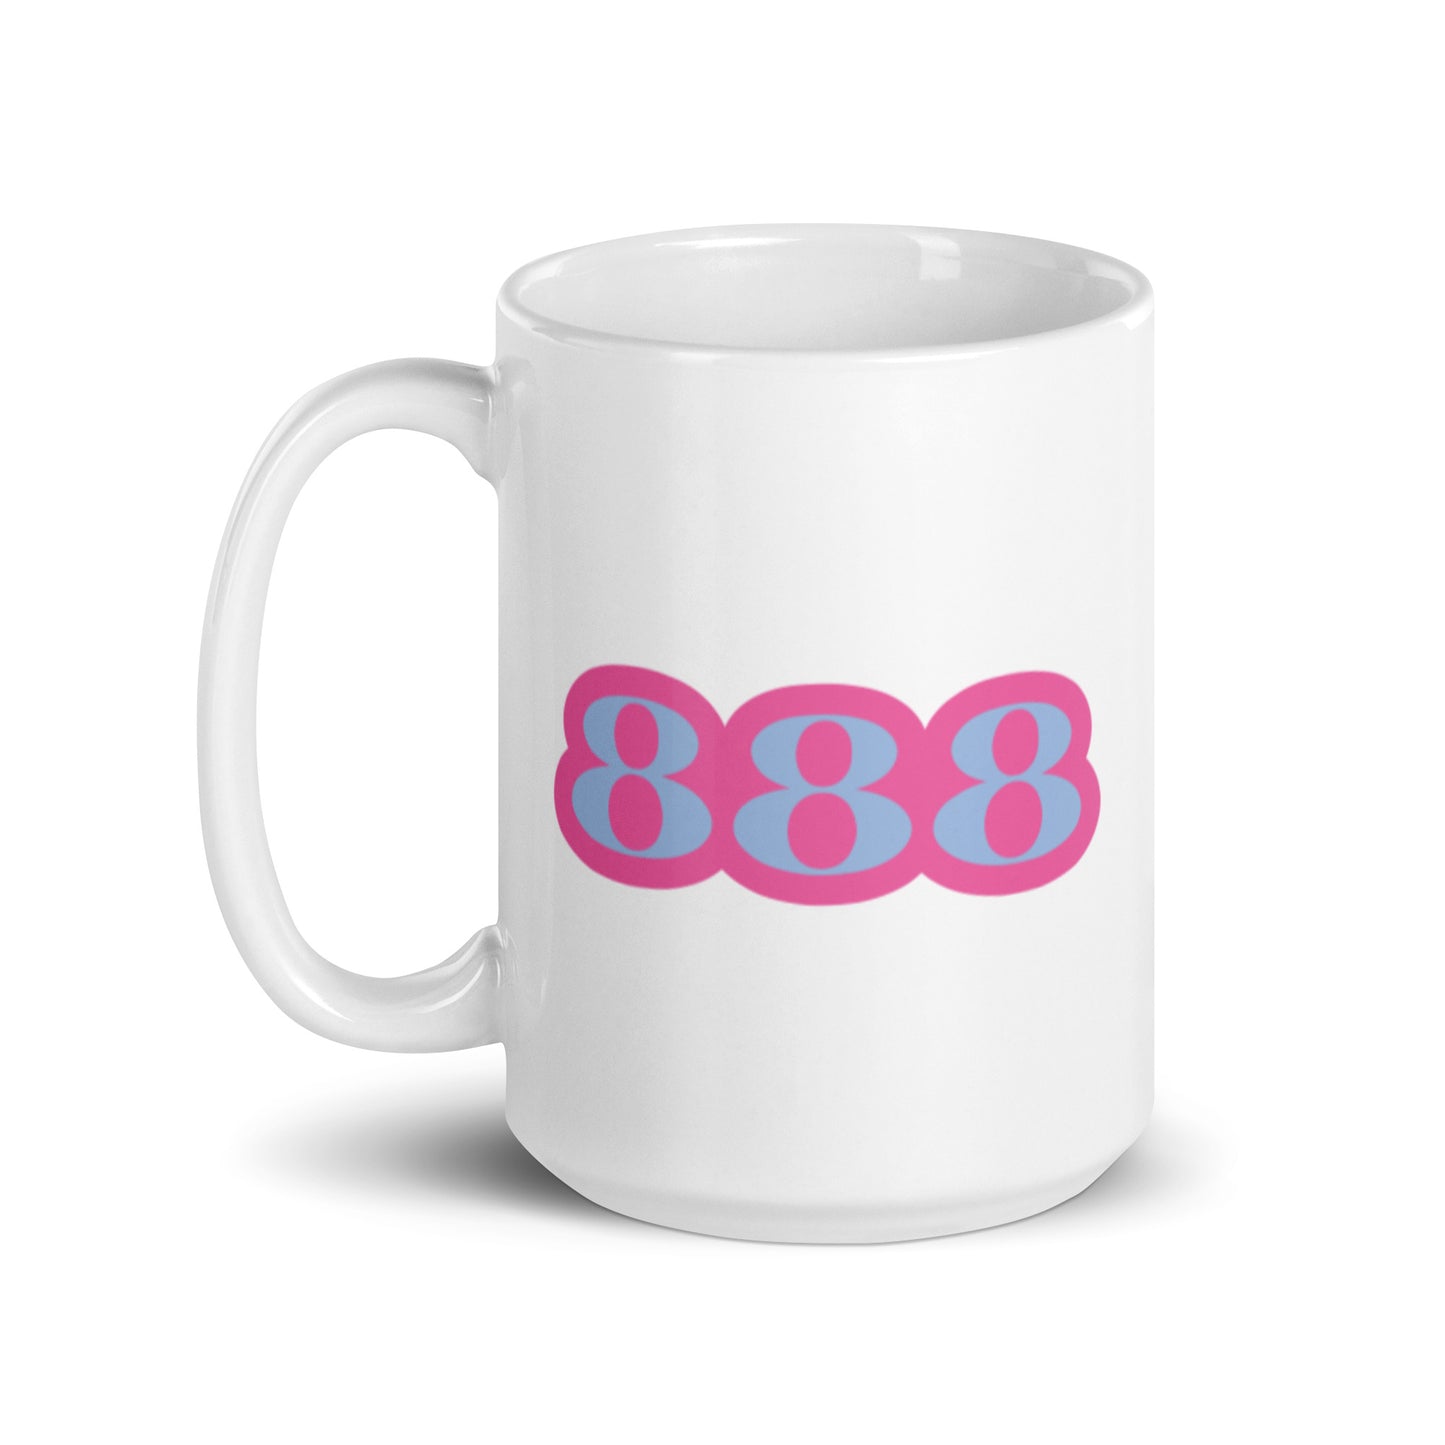 888 Angel Number XL White Glossy Mug (15oz)